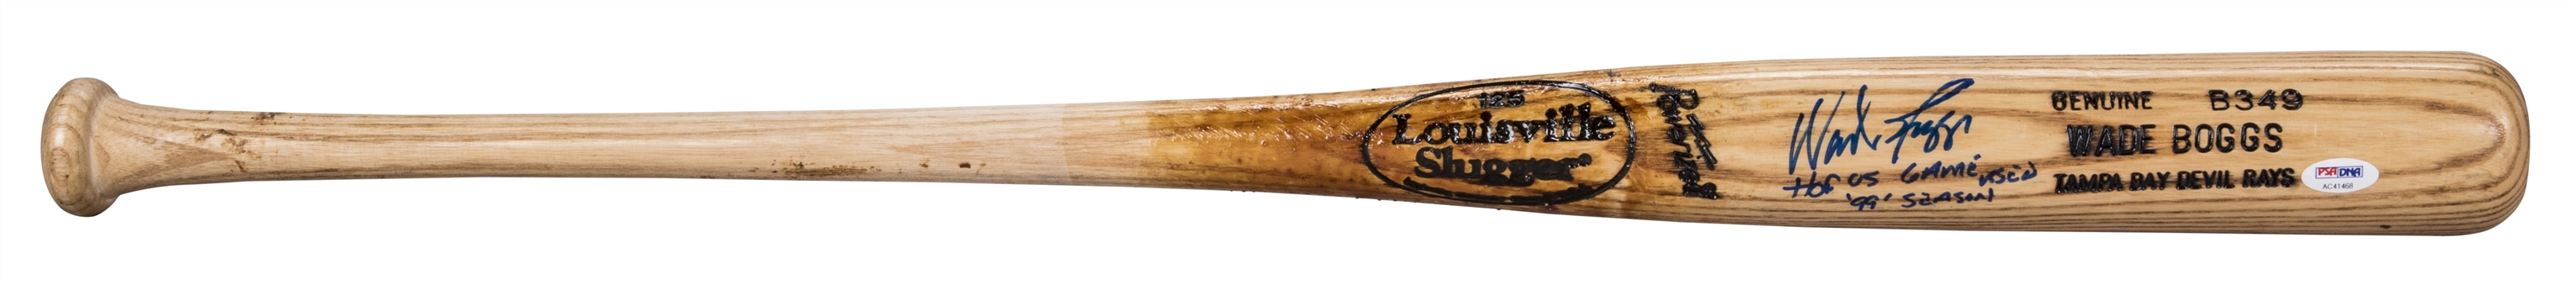 1998 Wade Boggs Game Used, Signed and Inscribed Louisville Slugger B349 Model Bat (PSA/DNA GU 8.5)